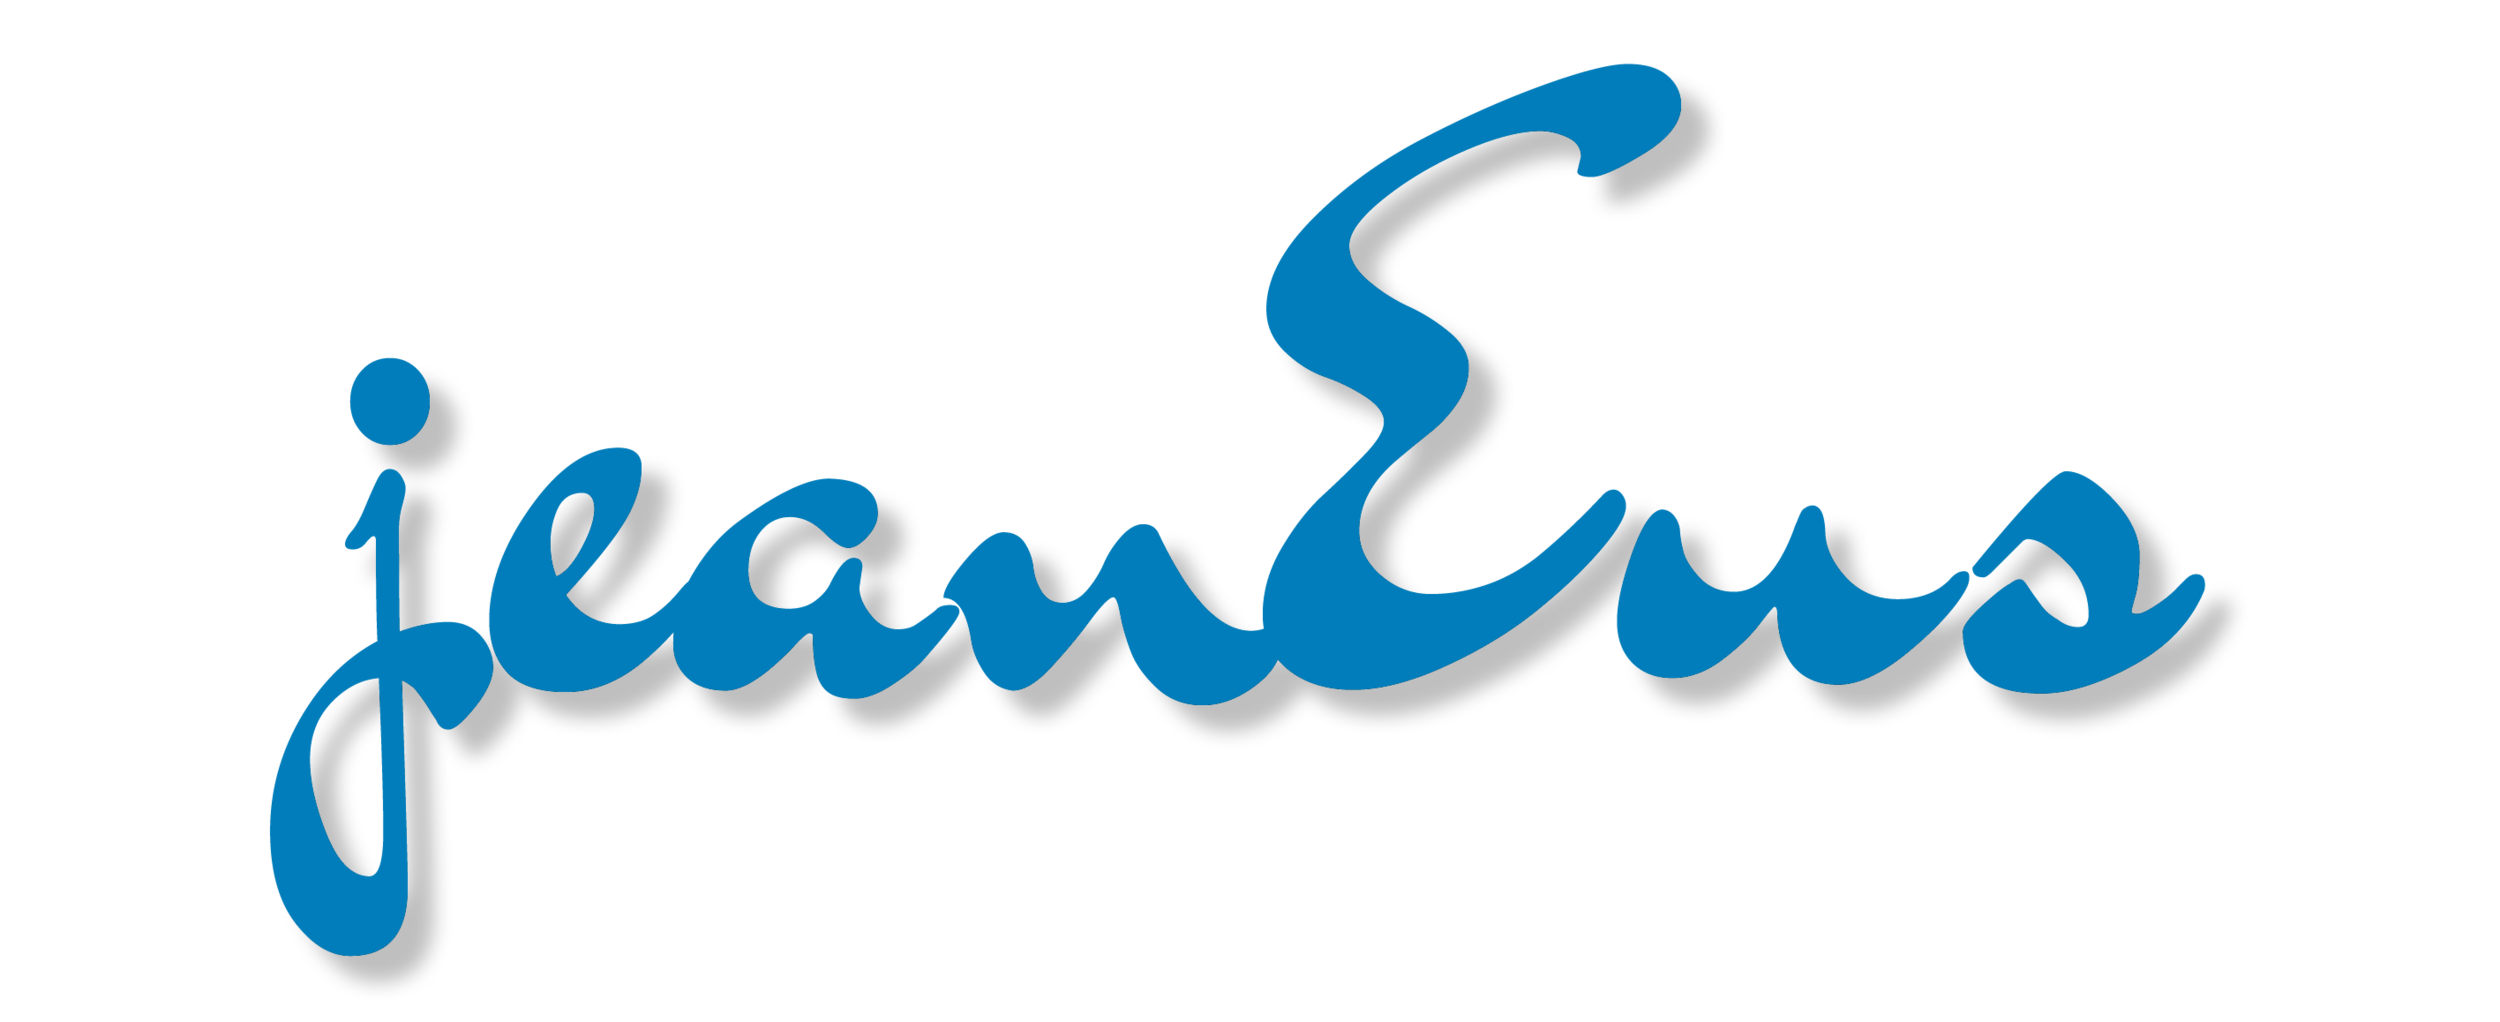 jeanEus logo.png